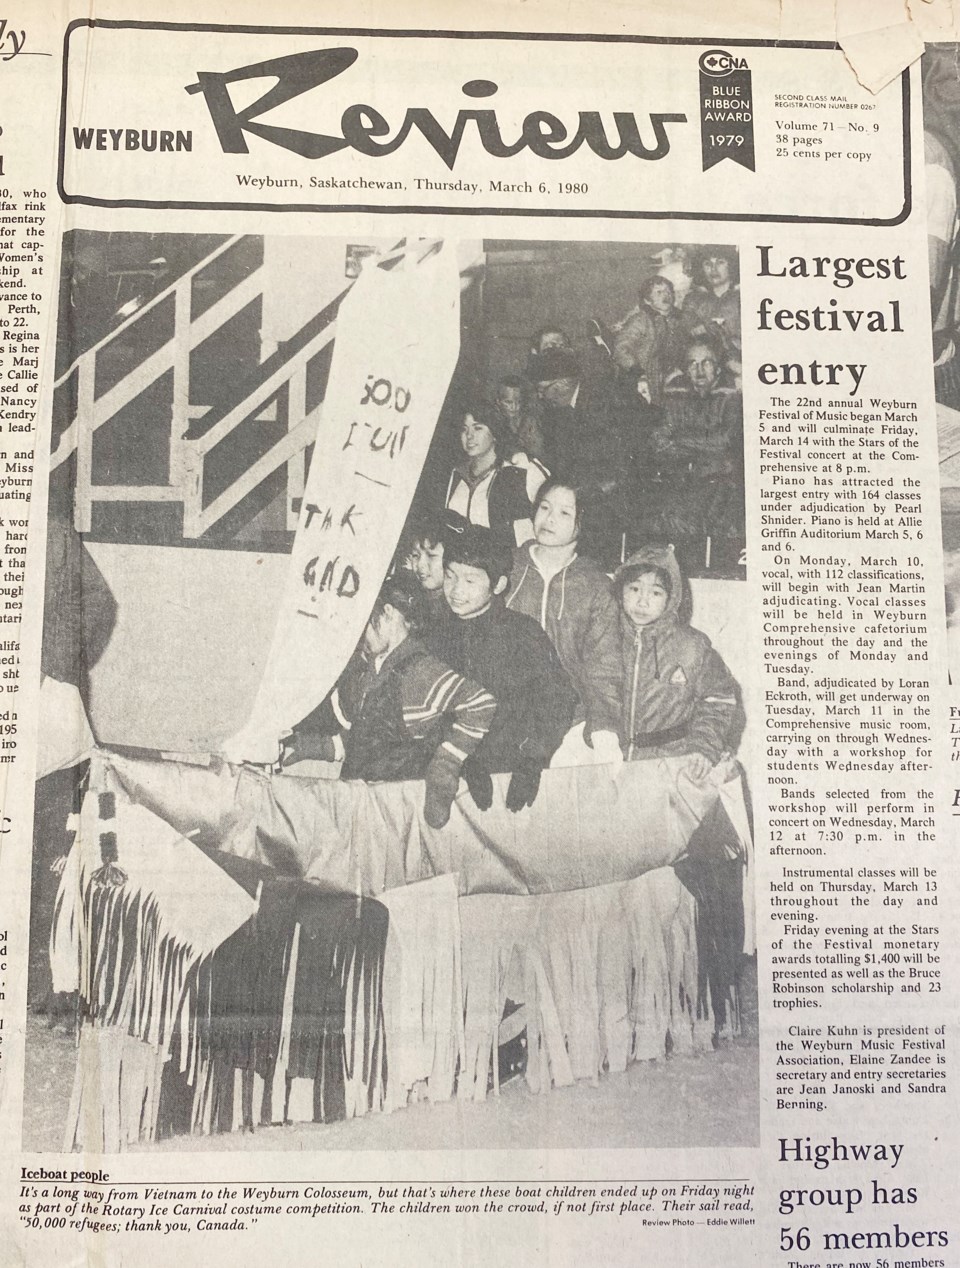 40 years ago Festival Entry